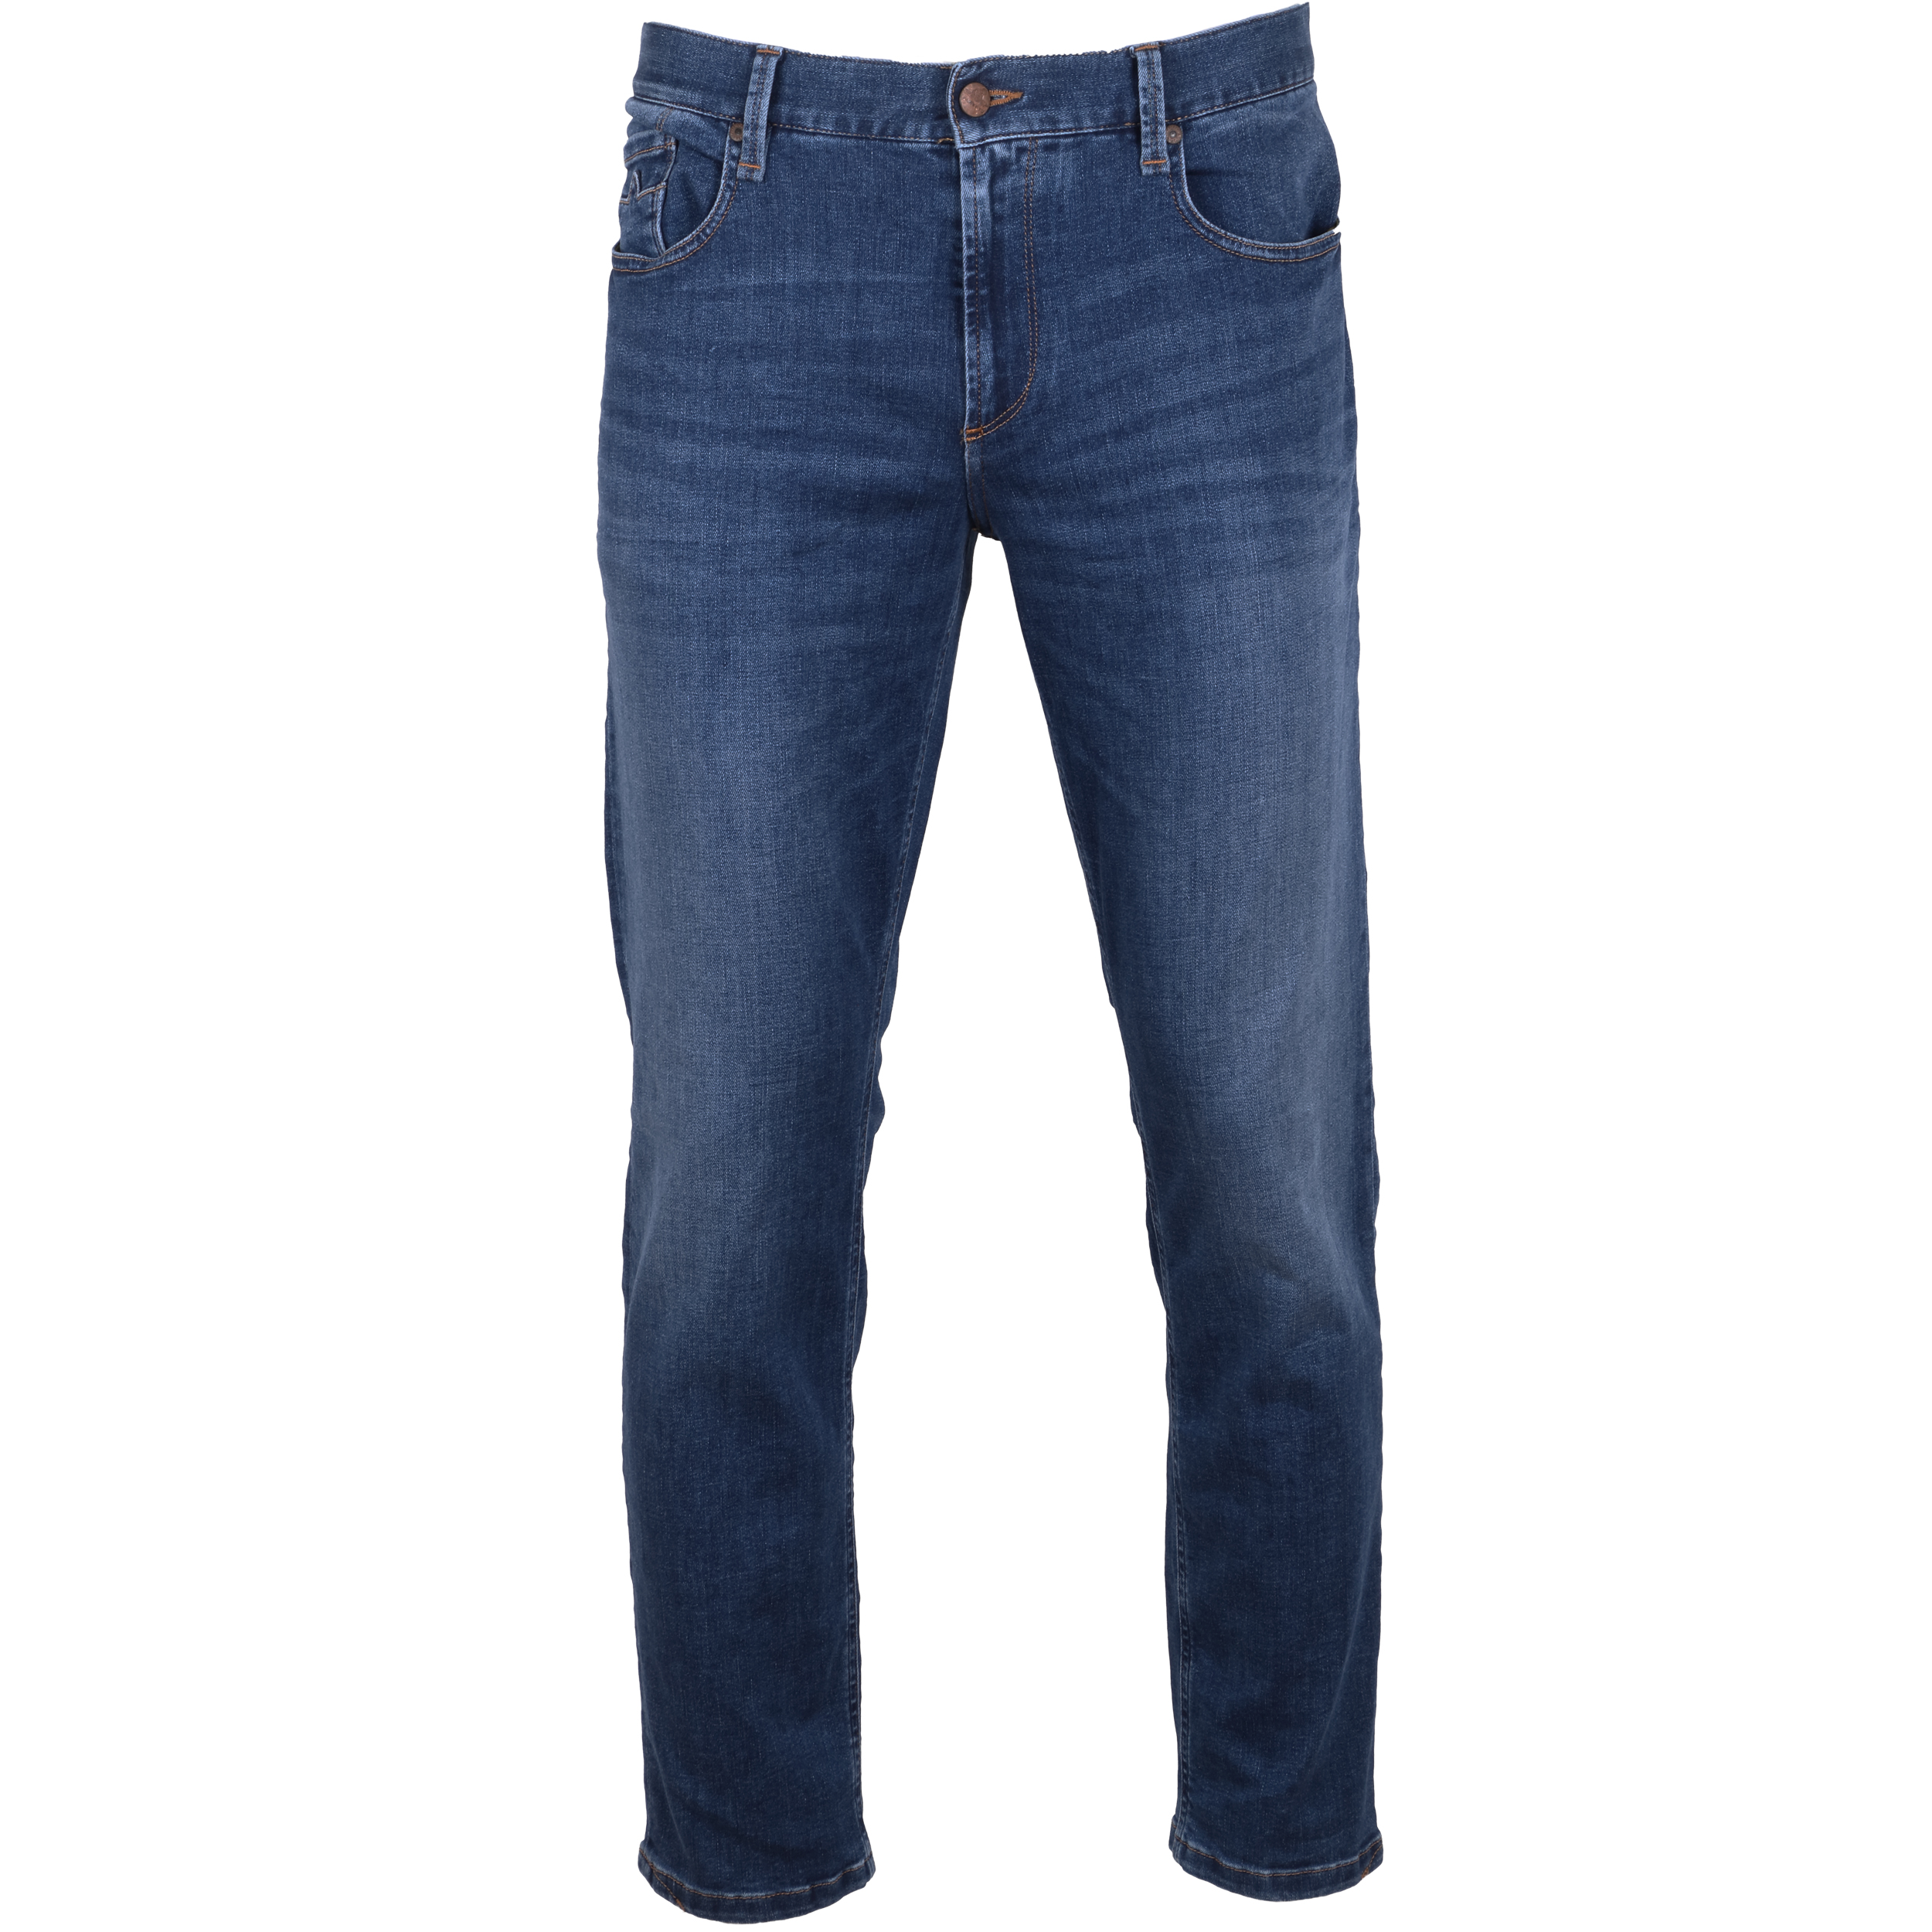 Alberto Herren Jeans Slipe tapered fit - blau 35/34